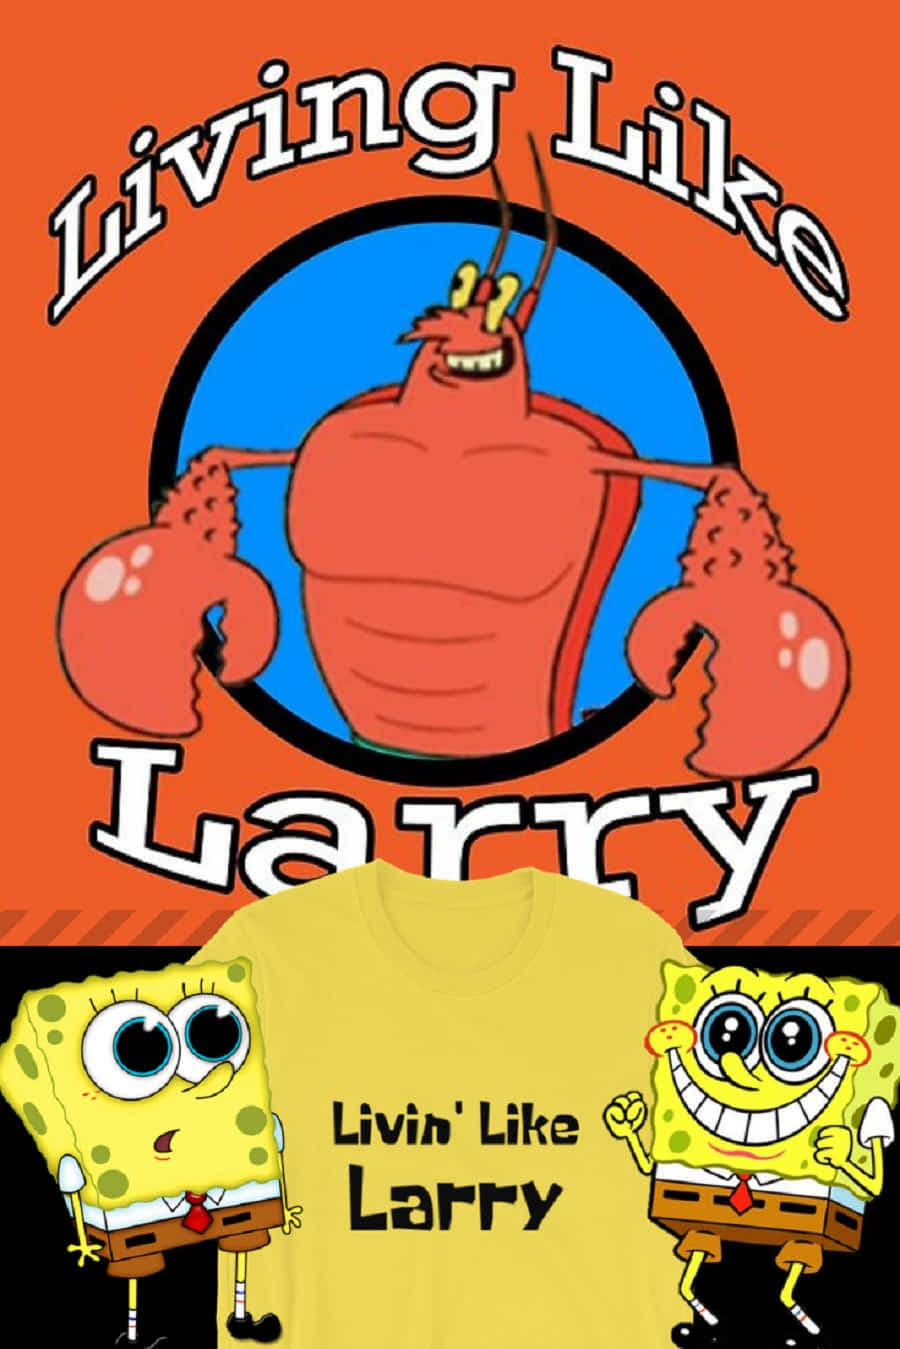 Meet Larry, the Smiling Lobster Wallpaper